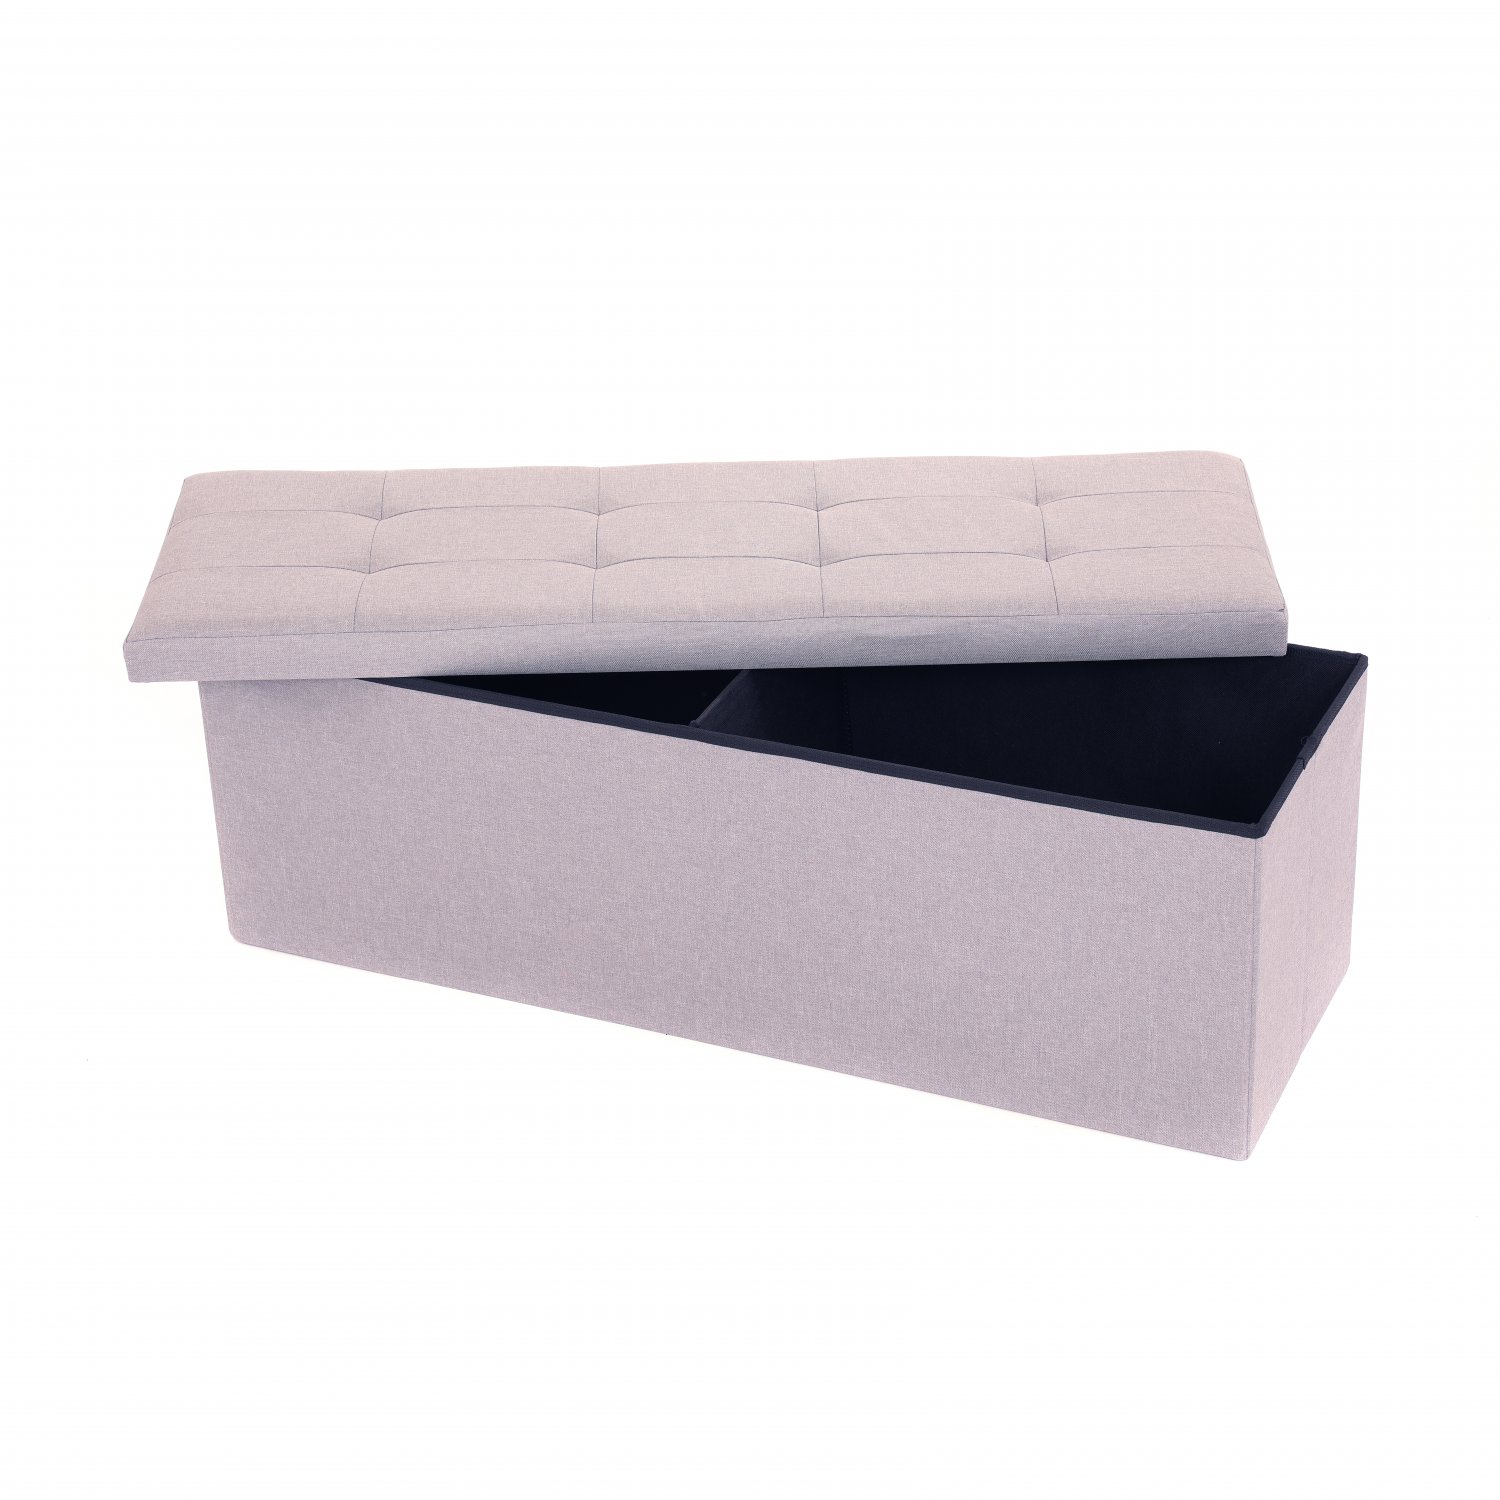 Large Grey Linen Folding Ottoman Storage Chest Box Seat Bench